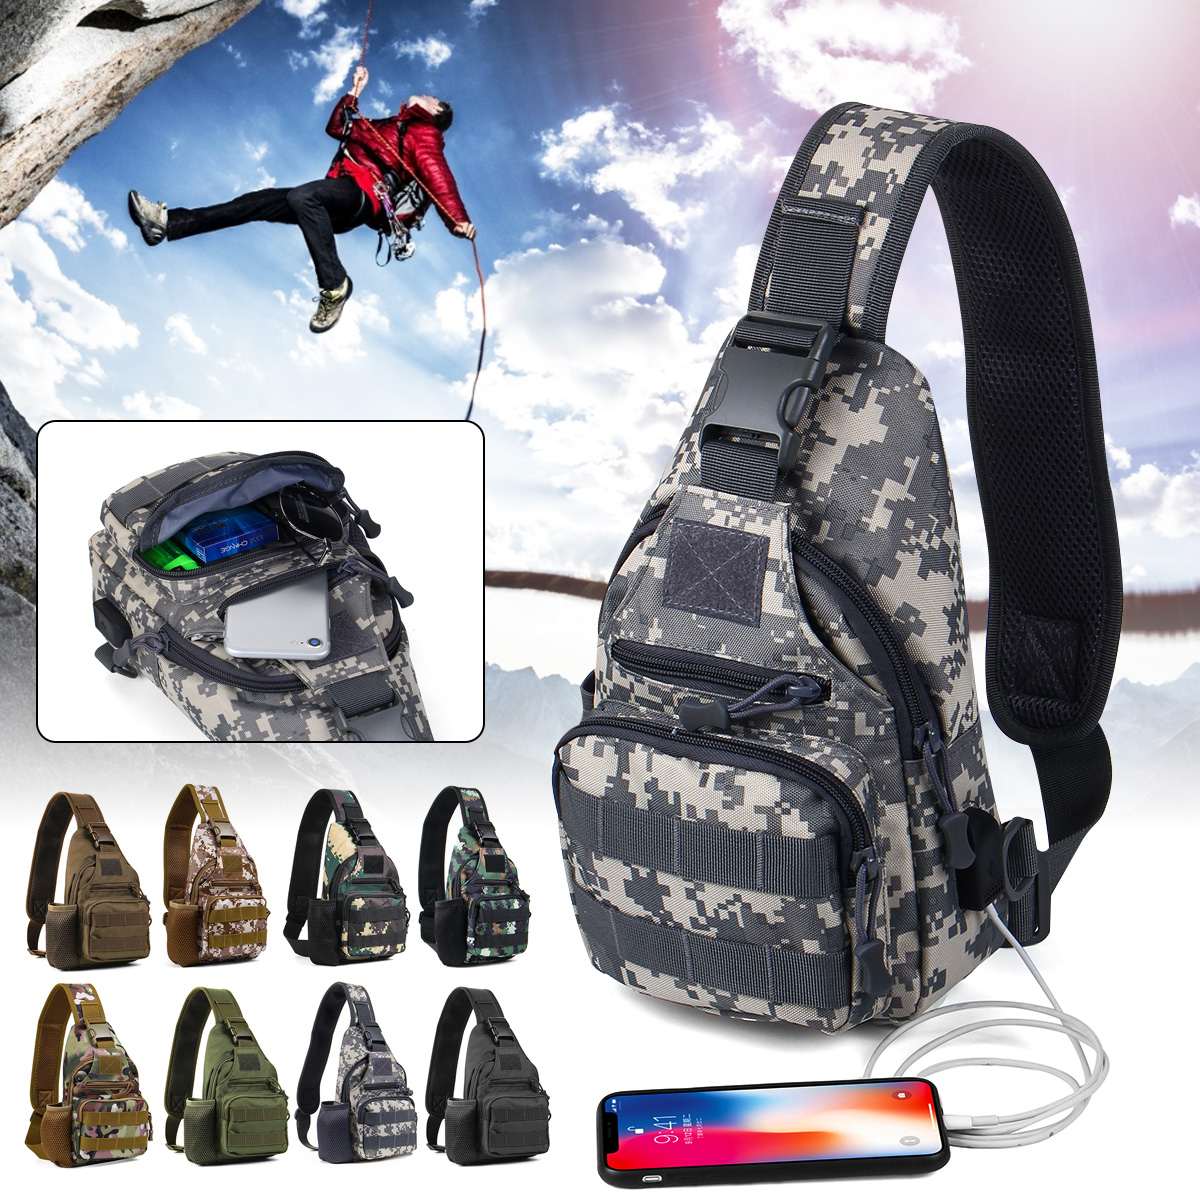 Oxford-Cloth-Tactical-Bag-USB-Charging-Chest-Bag-Climbing-Hiking-Shoulder-Bag-1612919-1